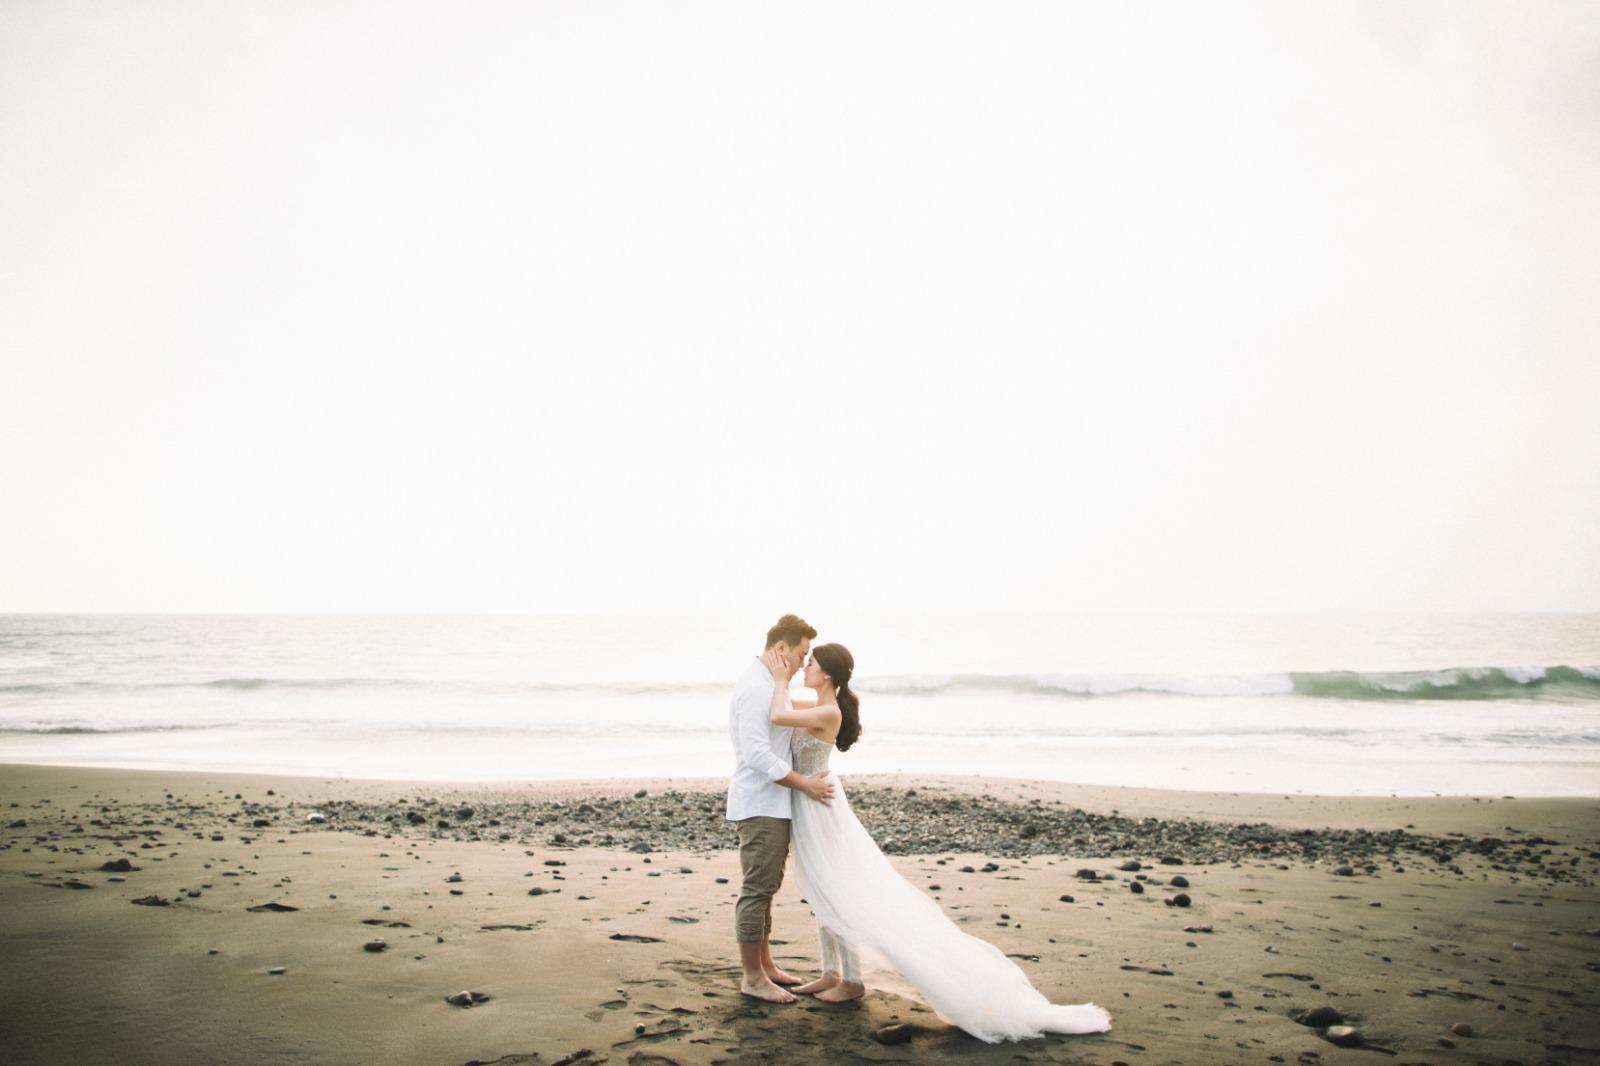 Michelle and Aloysius took their wedding photos in Bali. 